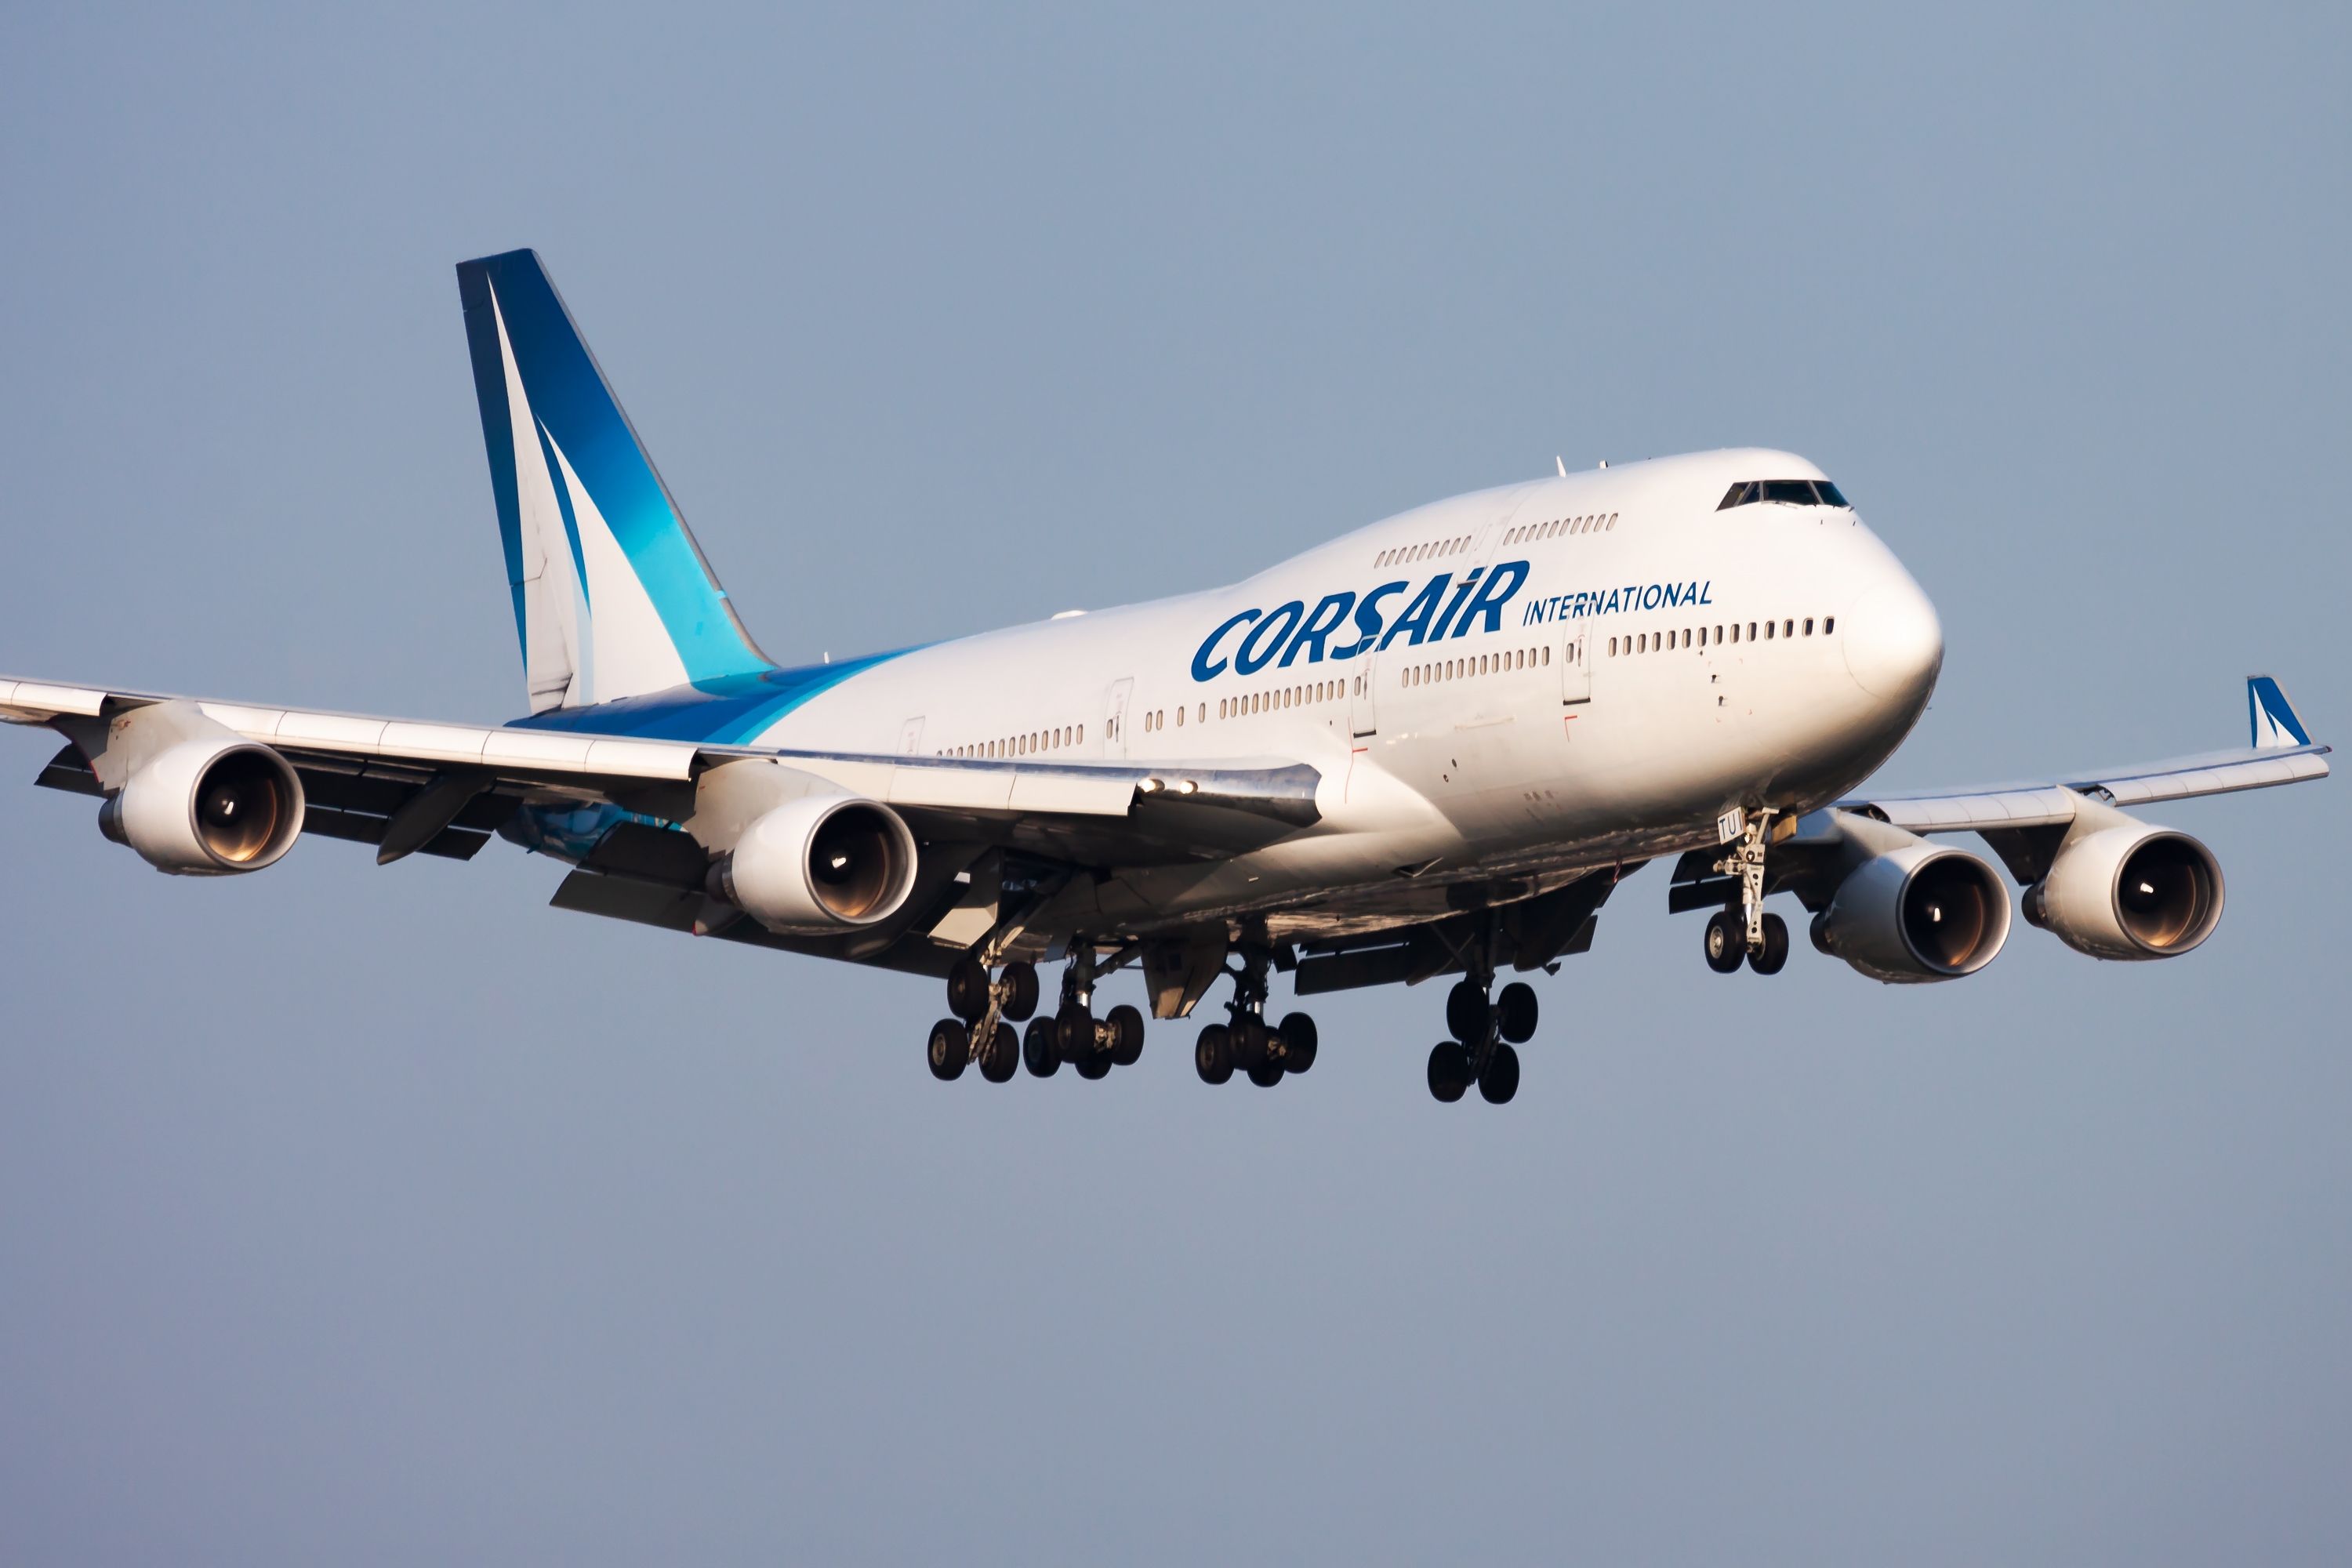 Corsair Boeing 747 aircraft landing